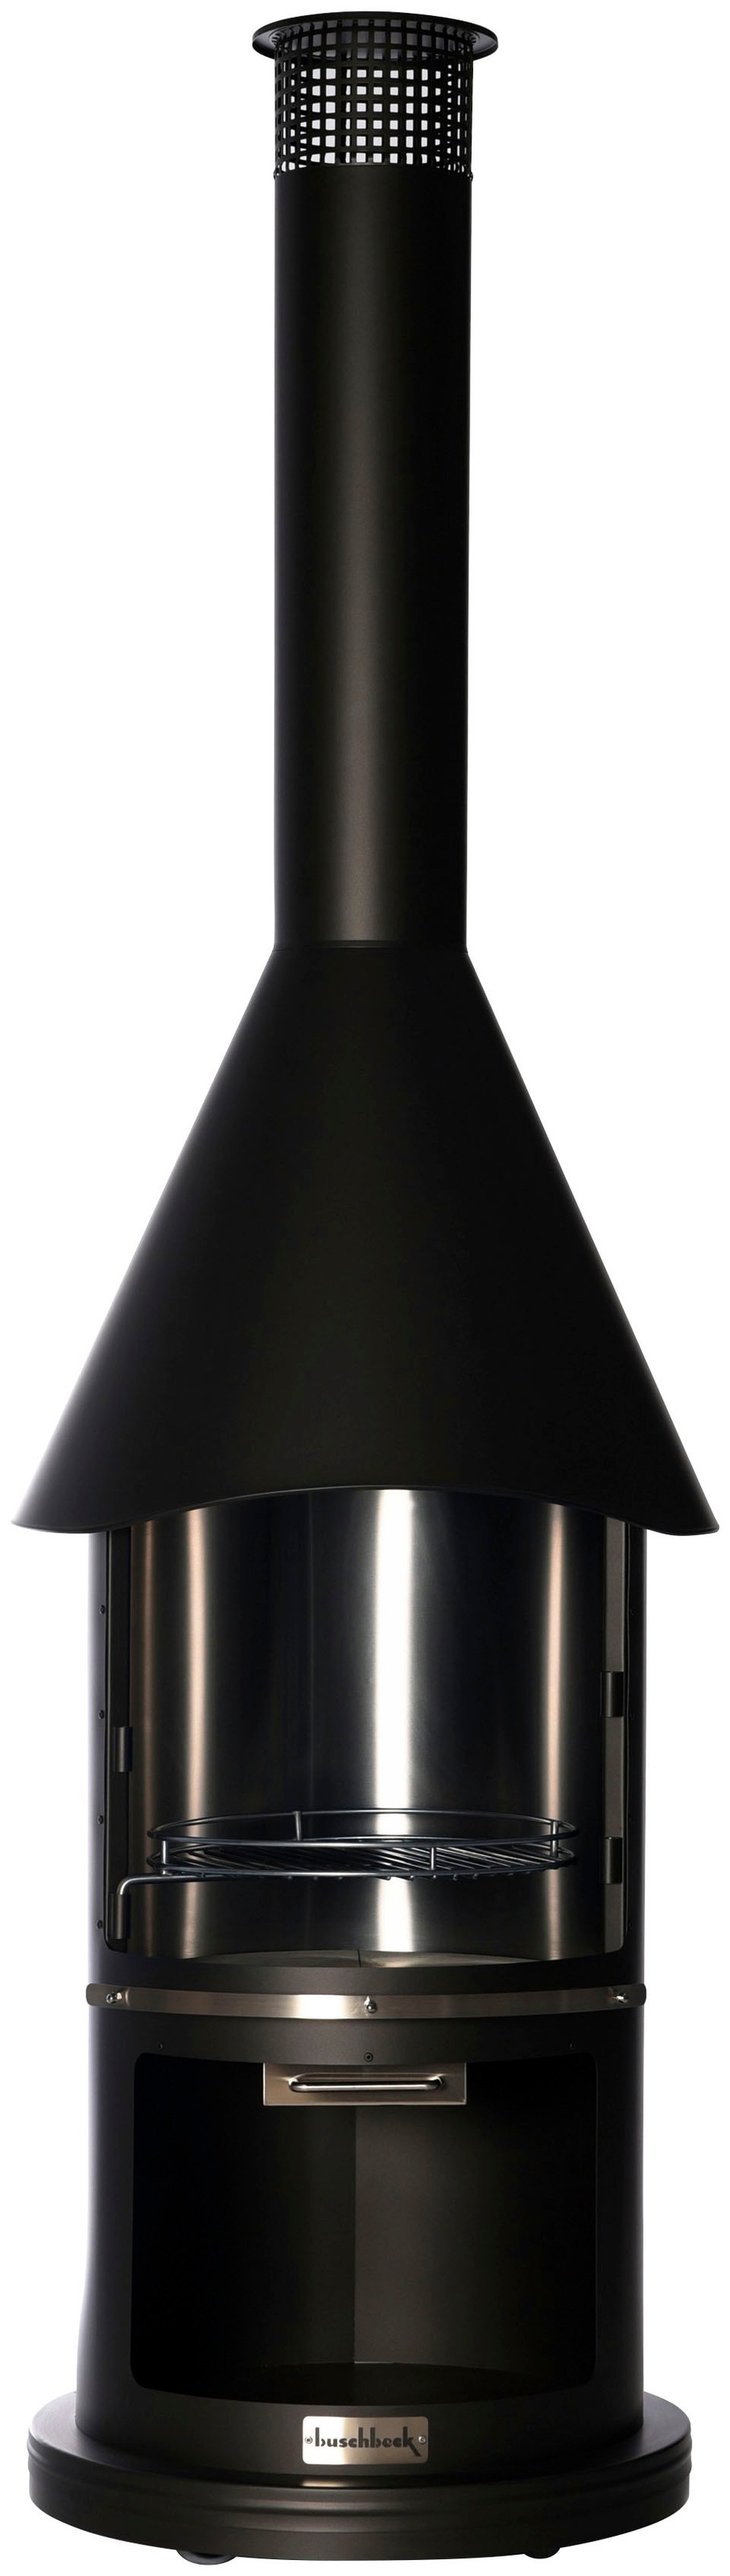 Buschbeck Holzkohlegrill »Edelstahlgrill Auckland, schwarz«, Edles Design, Premium-Produkt mit Senotherm-Lackierung, Ø65 x H 230 cm